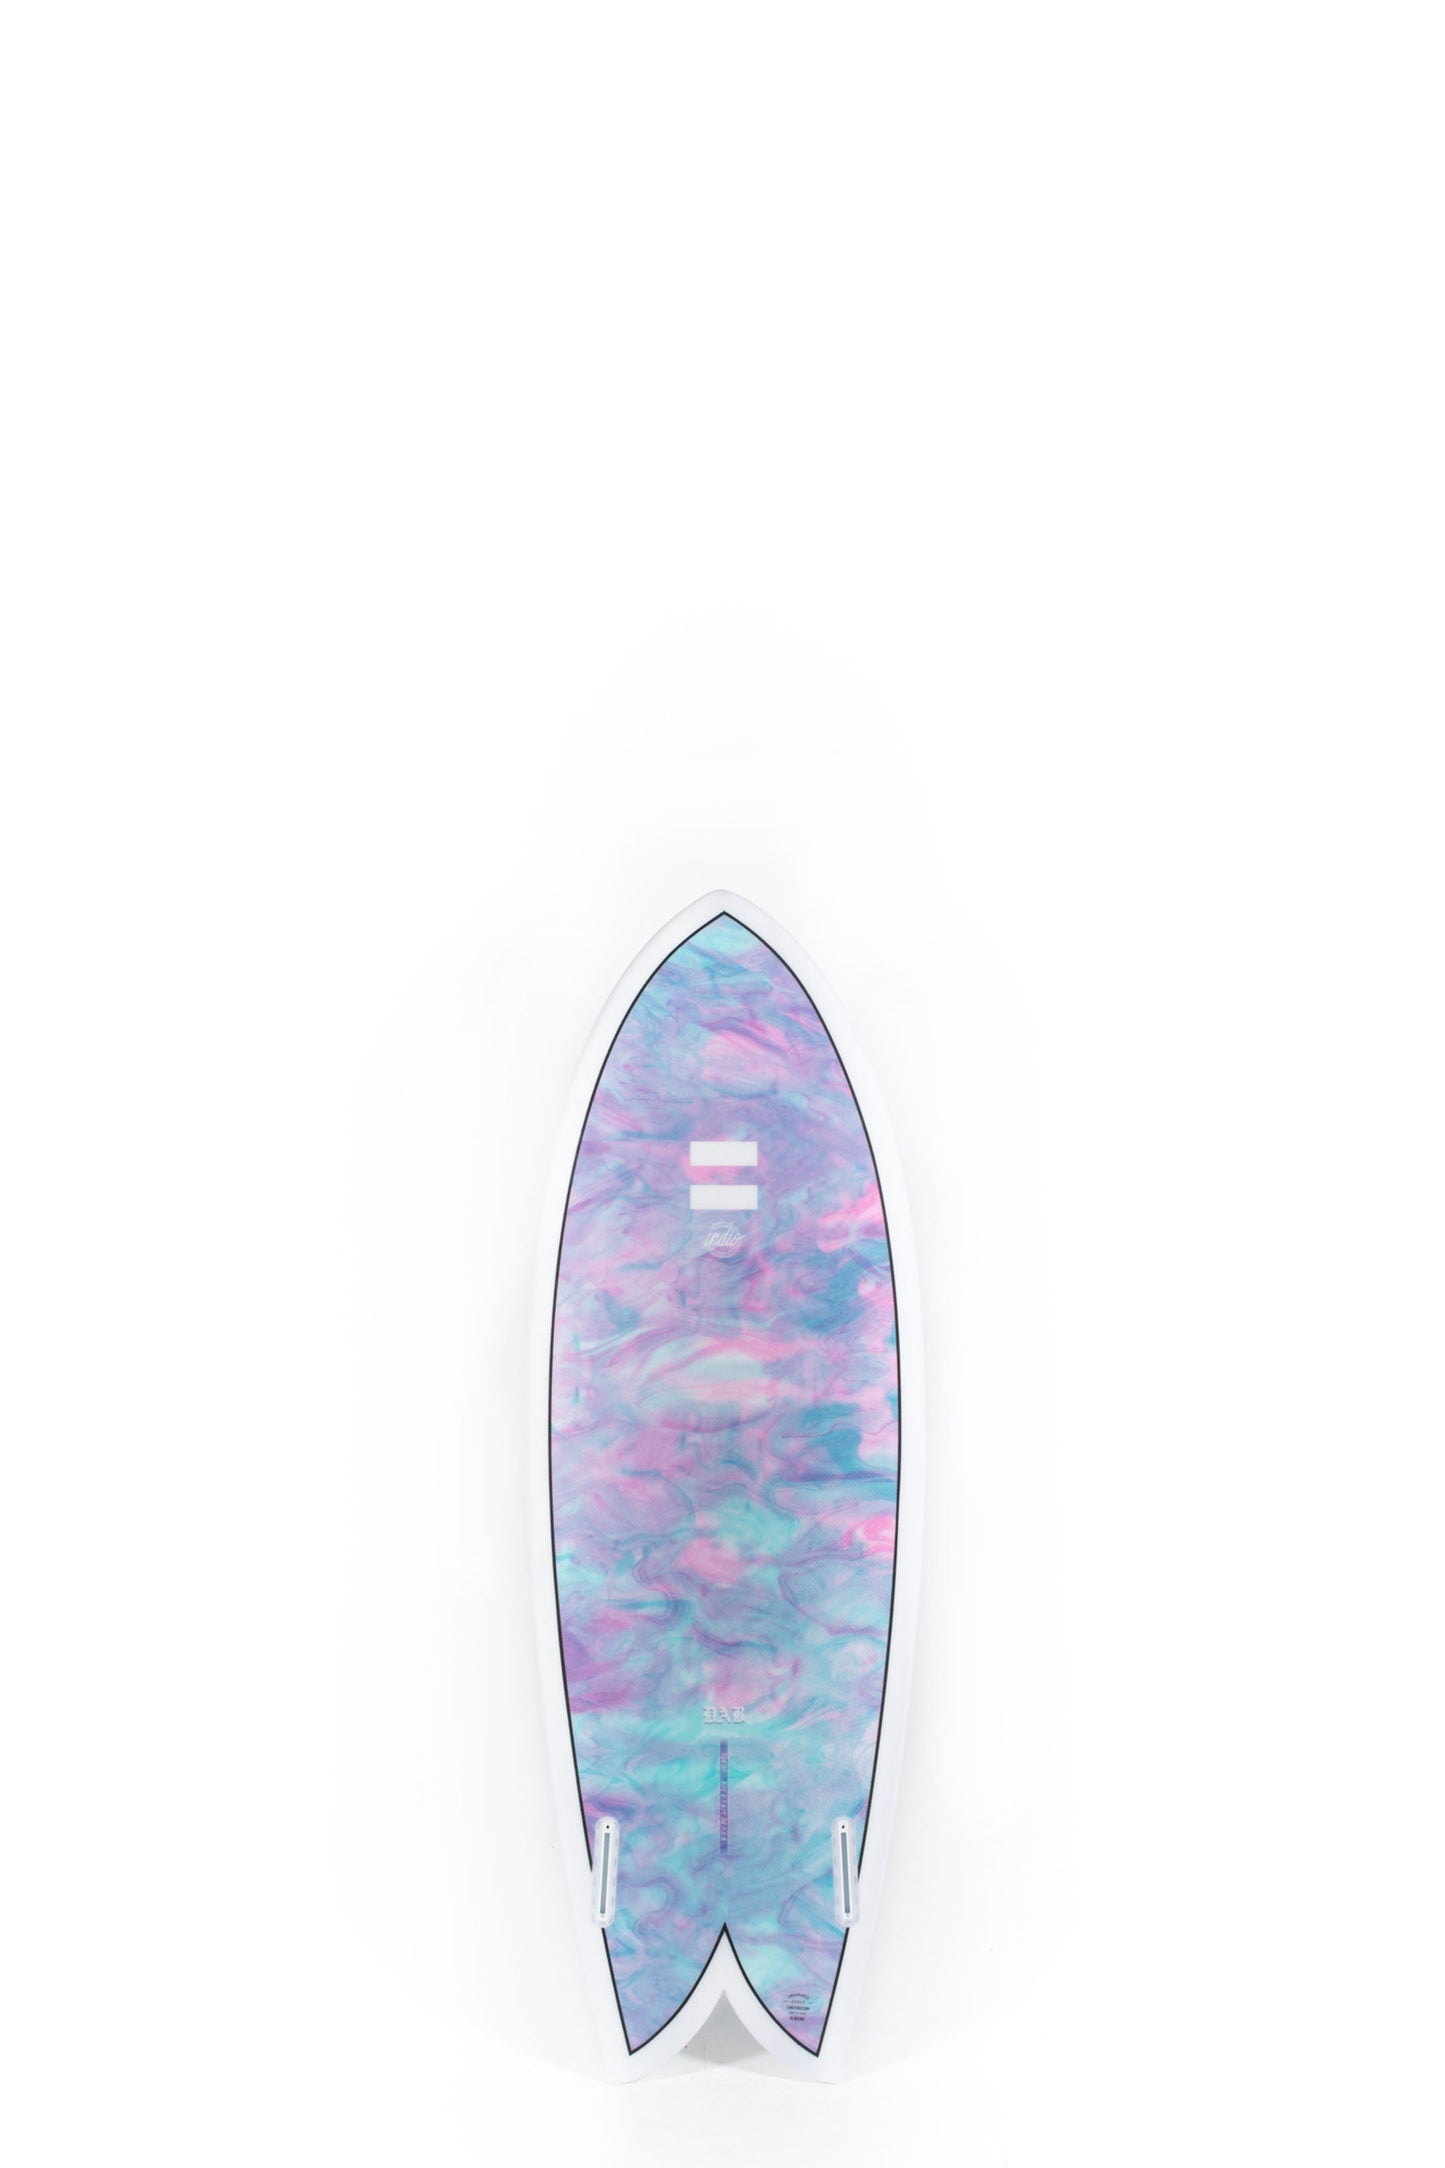 Pukas Surf Shop - Indio Surfboards - DAB Swirl Effect Blue Purple - 5’3” x 20 3/4 x 2 3/8 x 30.92L.